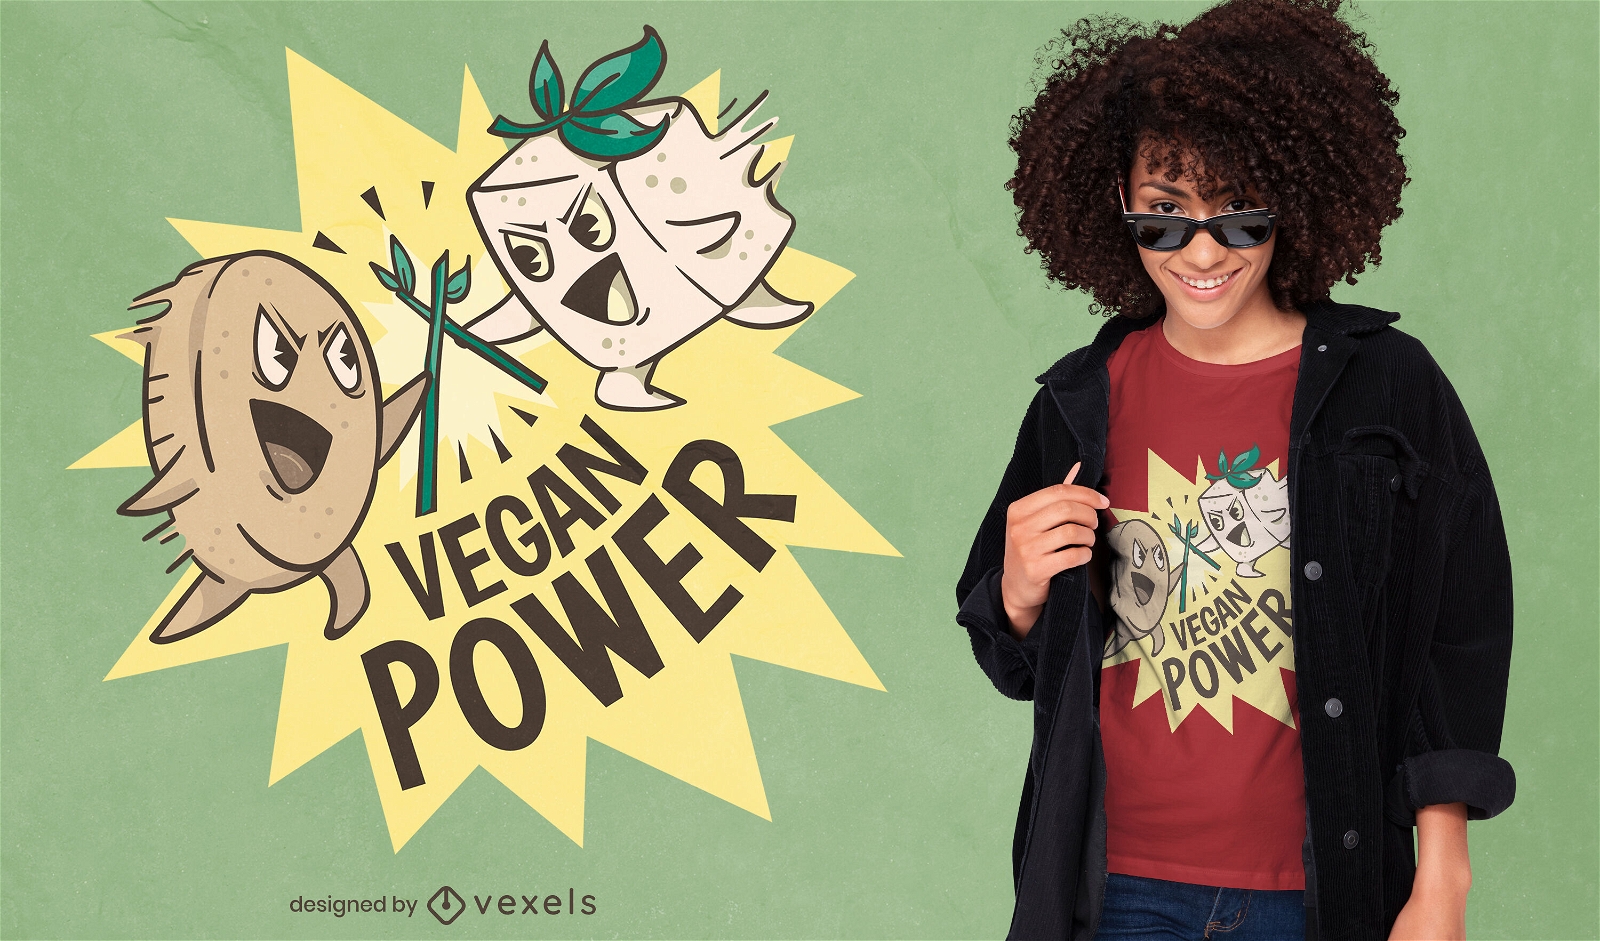 Awesome vegan power t-shirt design